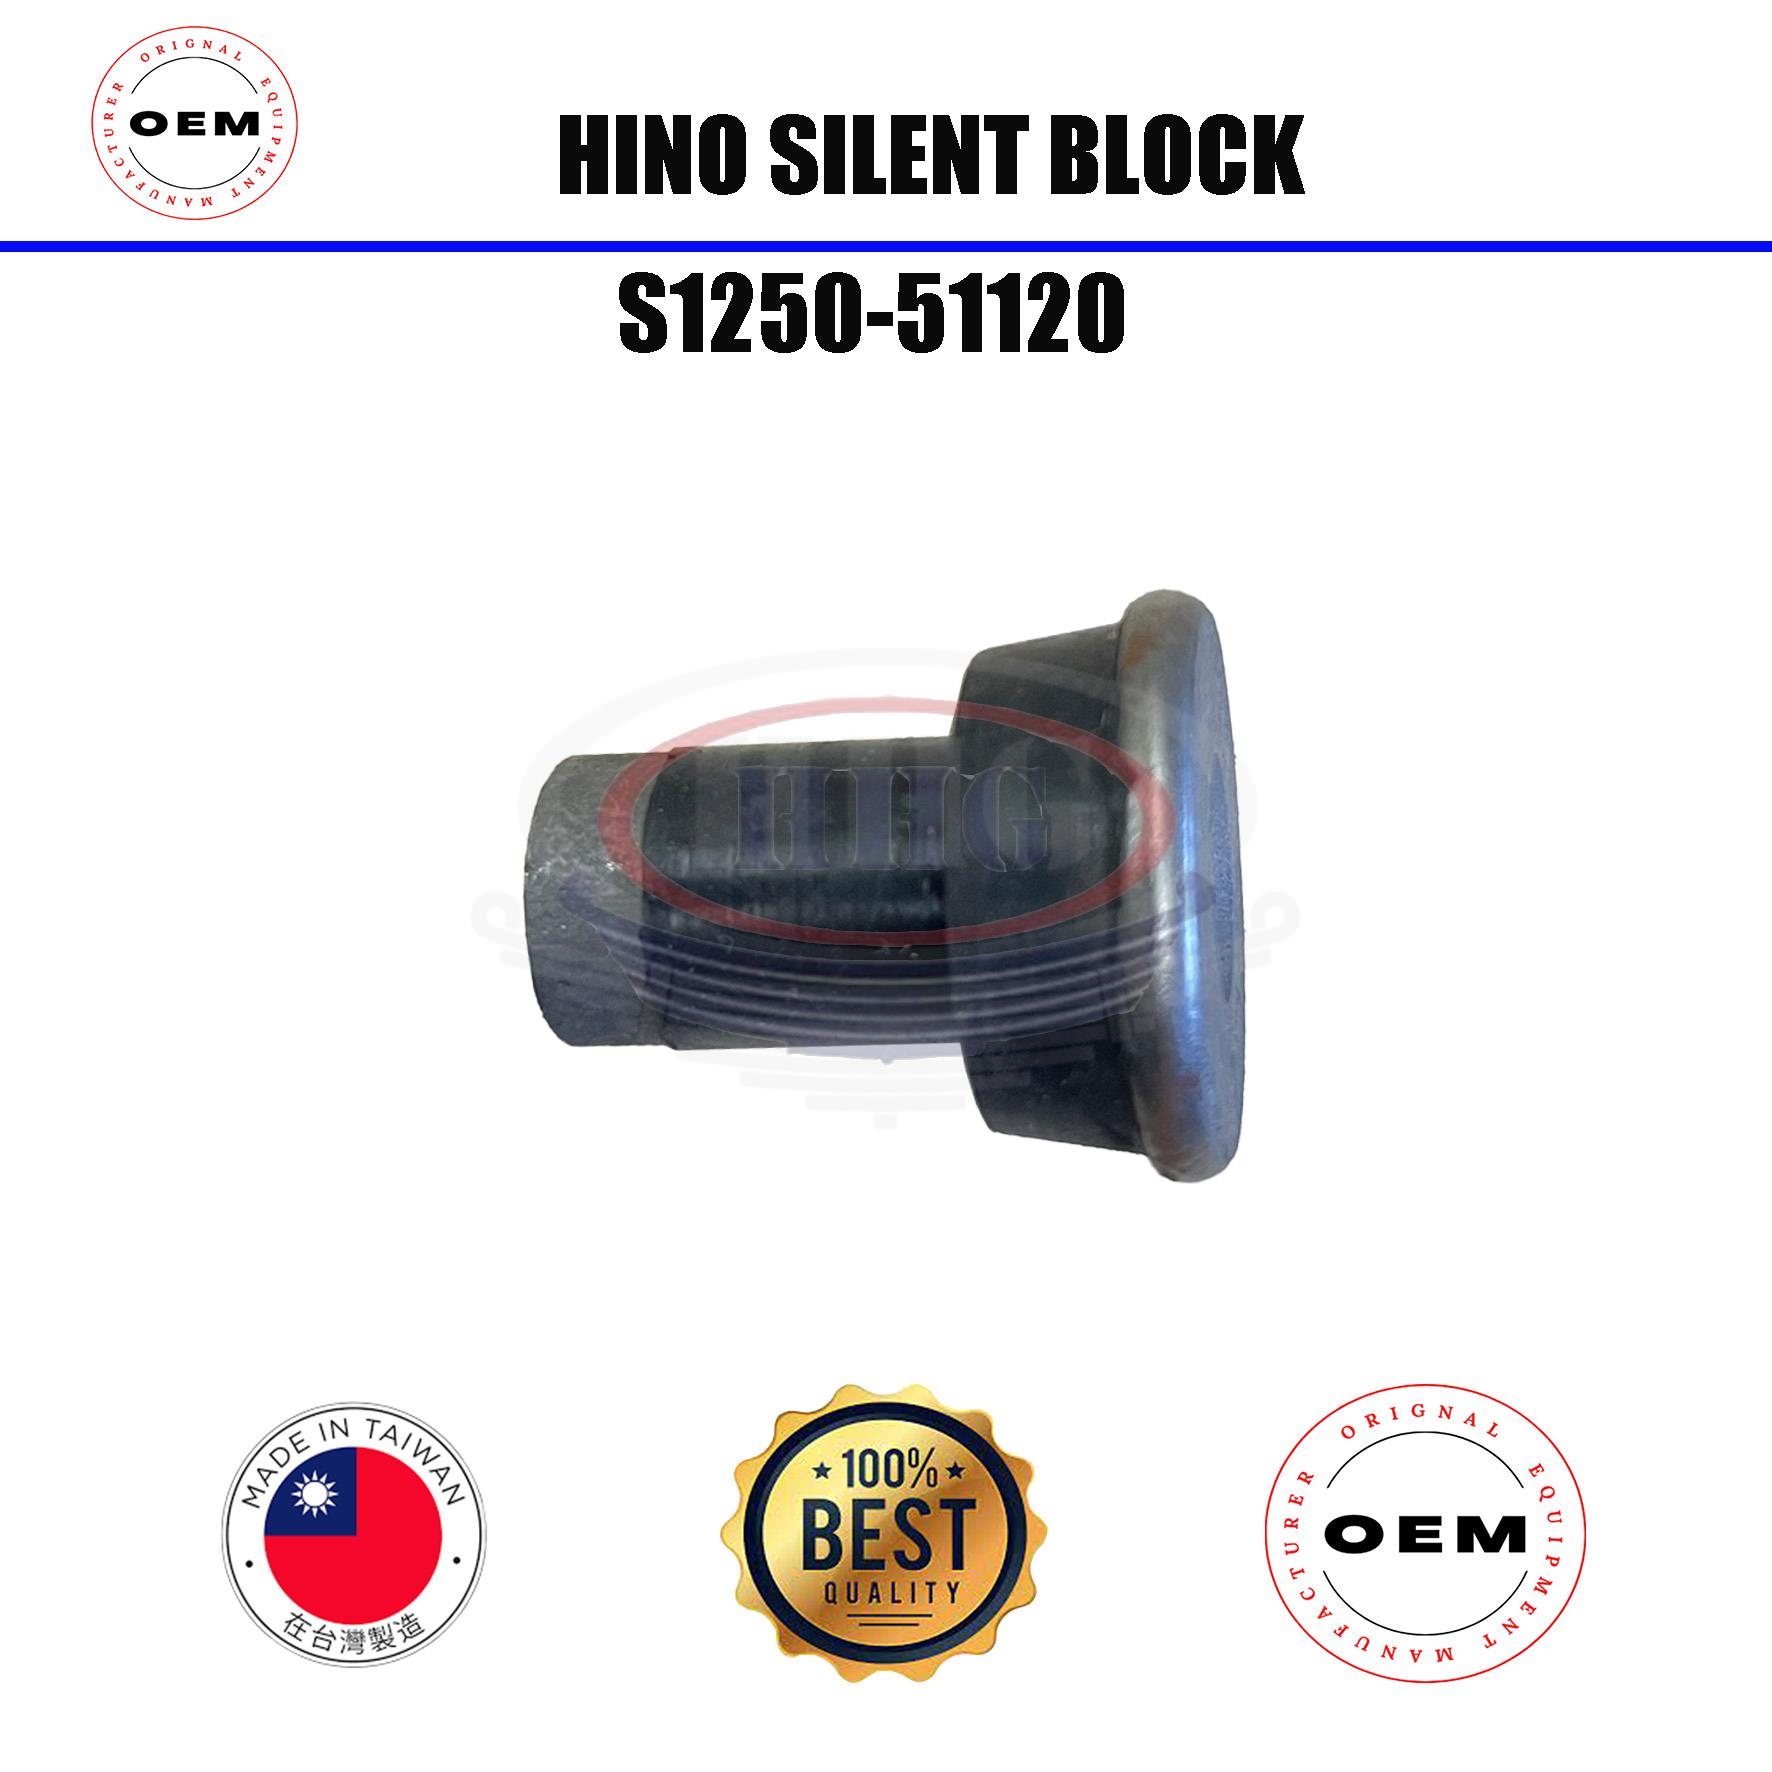 OEM Hino J08C Silent Block (S1250-51120)